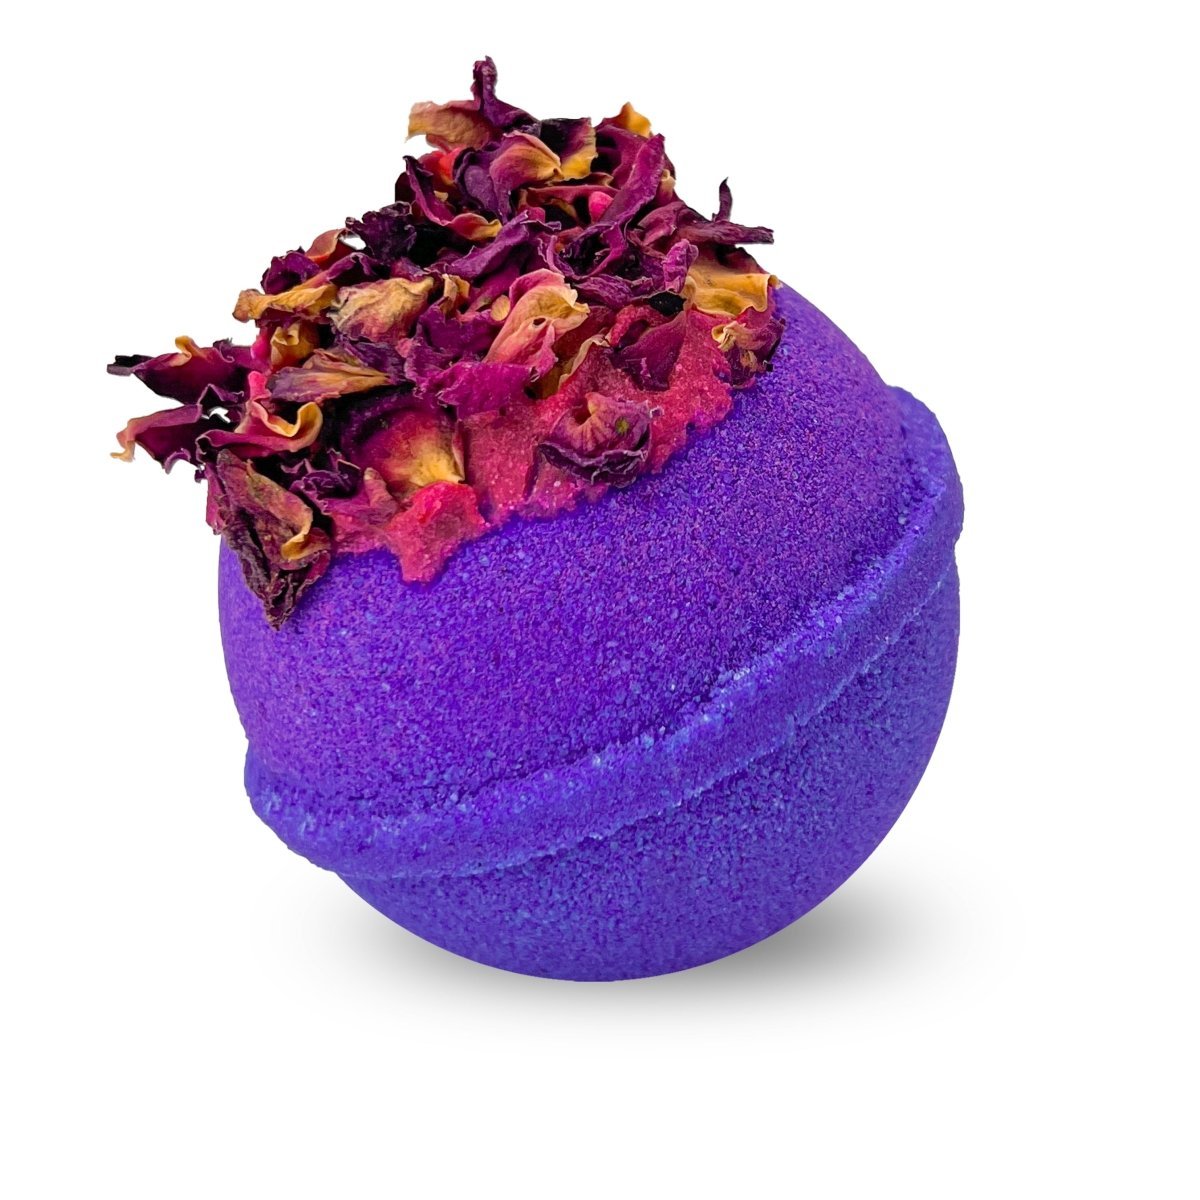 Shut Eye Sleep Bedtime Bath Bomb for Kids & Adults - Colourful Glitters & Lavender Fragrance - Made in Australia by Bath Box